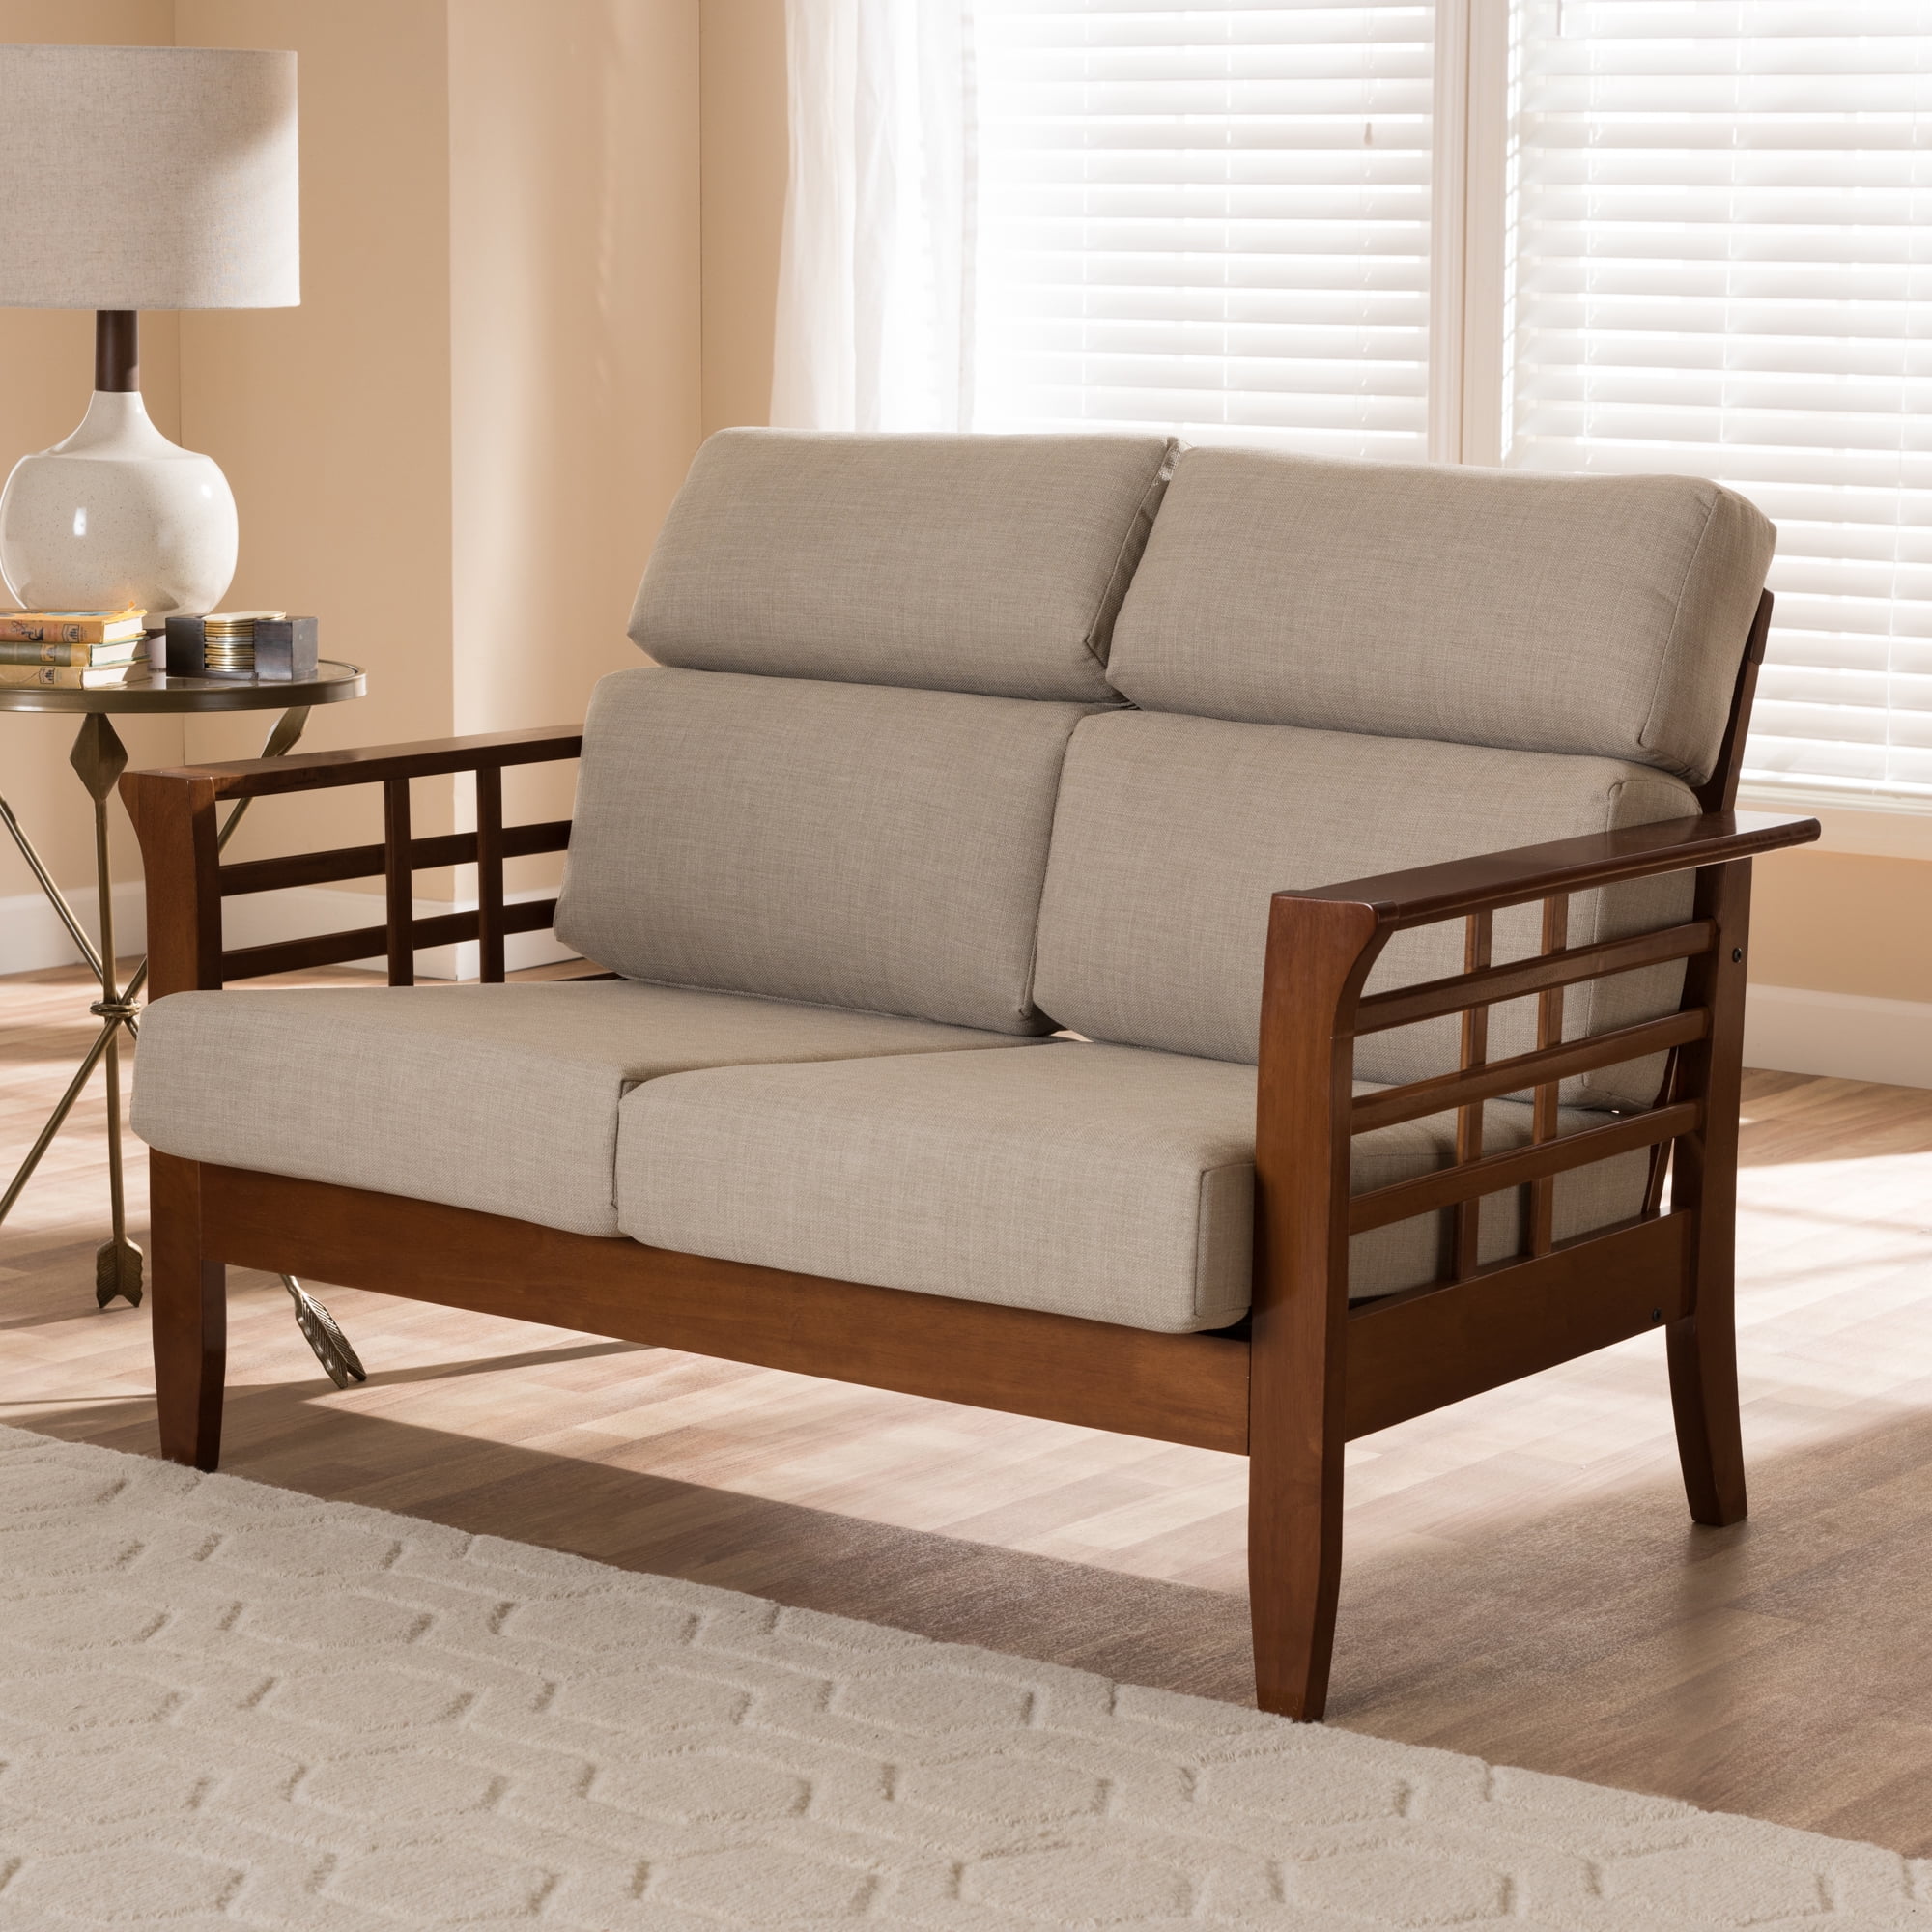 Wholesale Sofa Sets, Wholesale Living Room Furniture